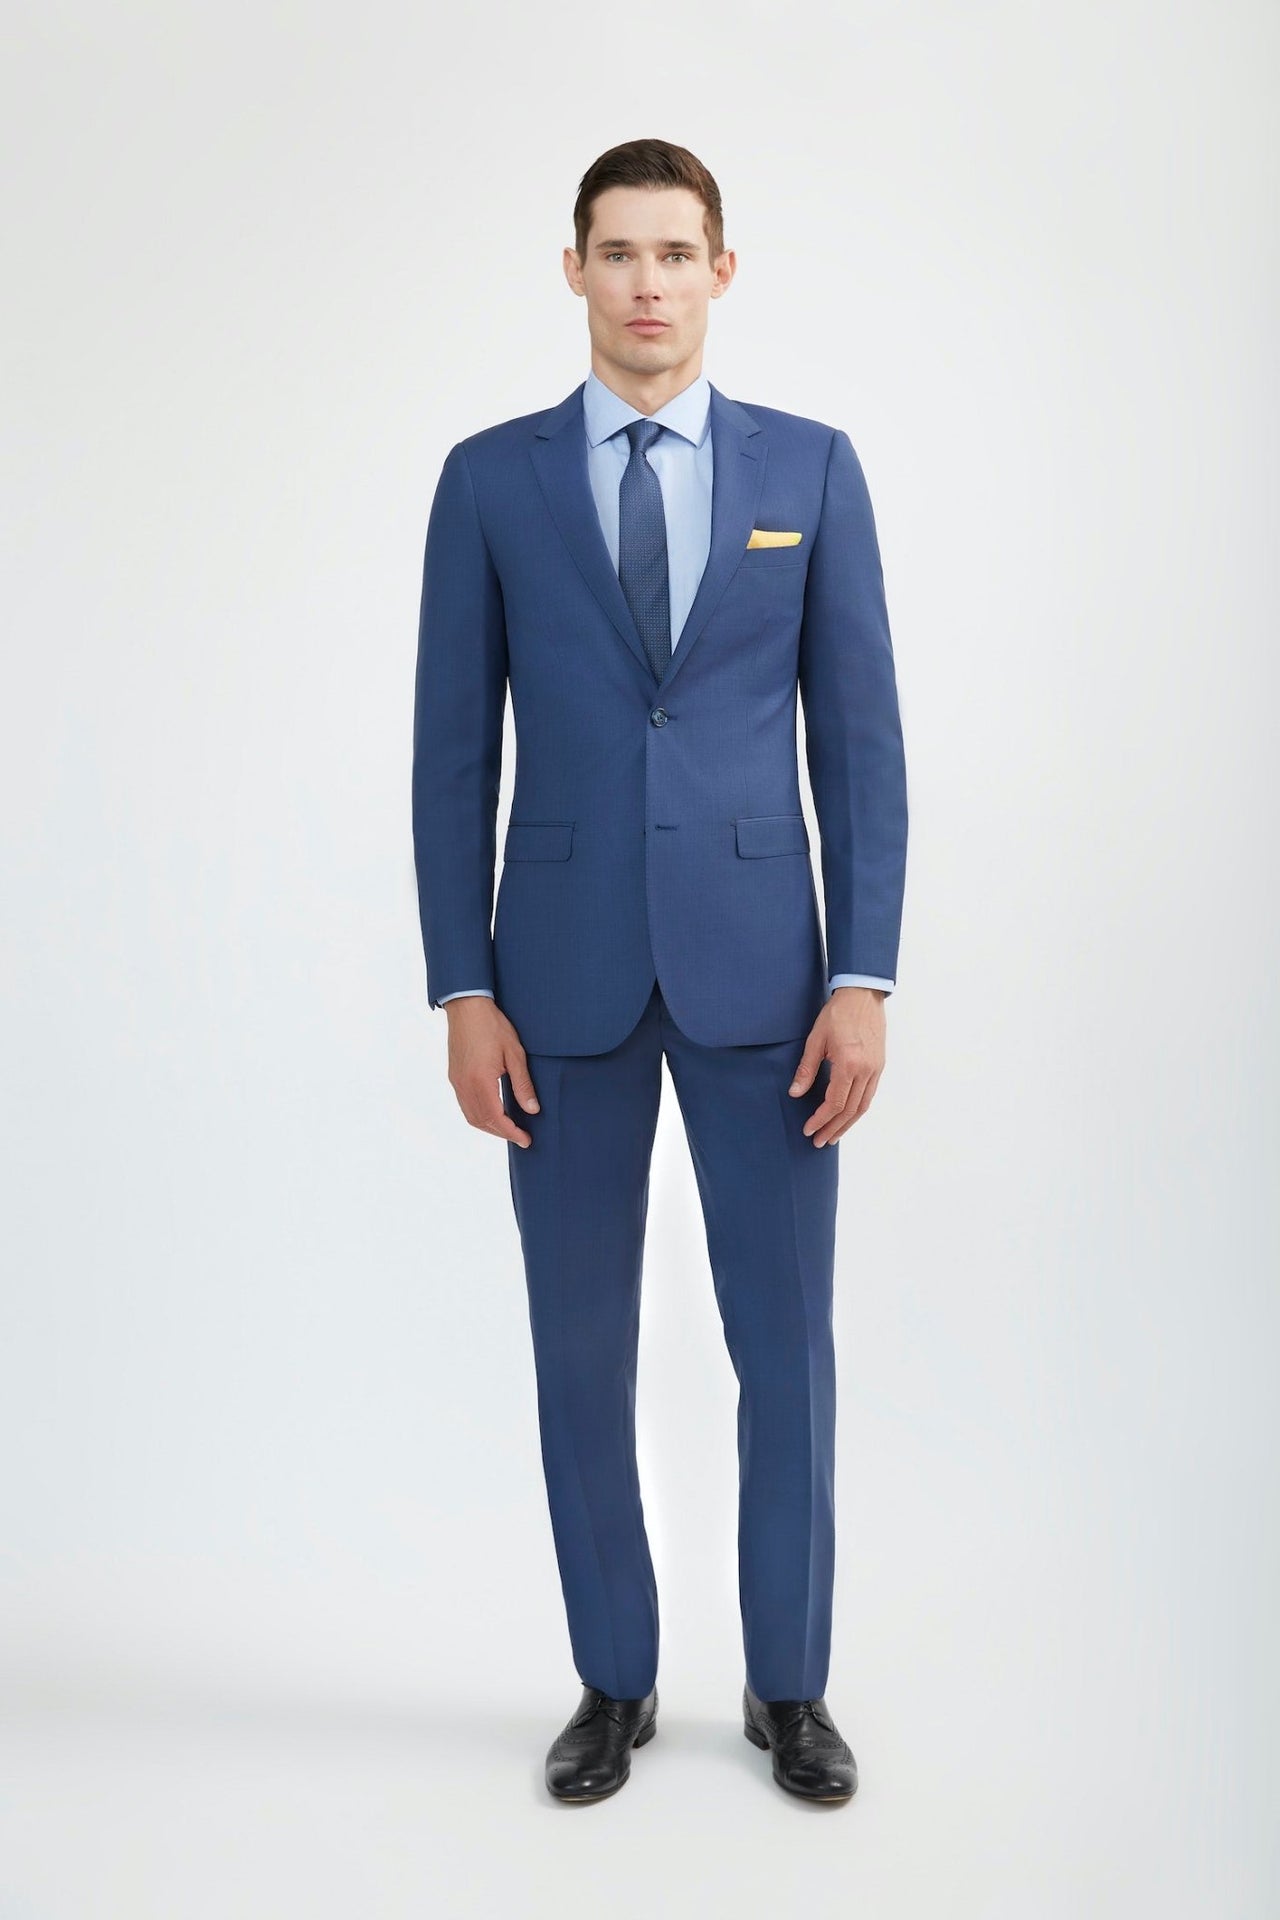 Buy Black Slim-fit Italian Cut Suit Mens Suit Black 3 Piece Suit Wedding Suit  Black Slim-fit Suit Date Night Suit Groom Suit Black Online in India - Etsy